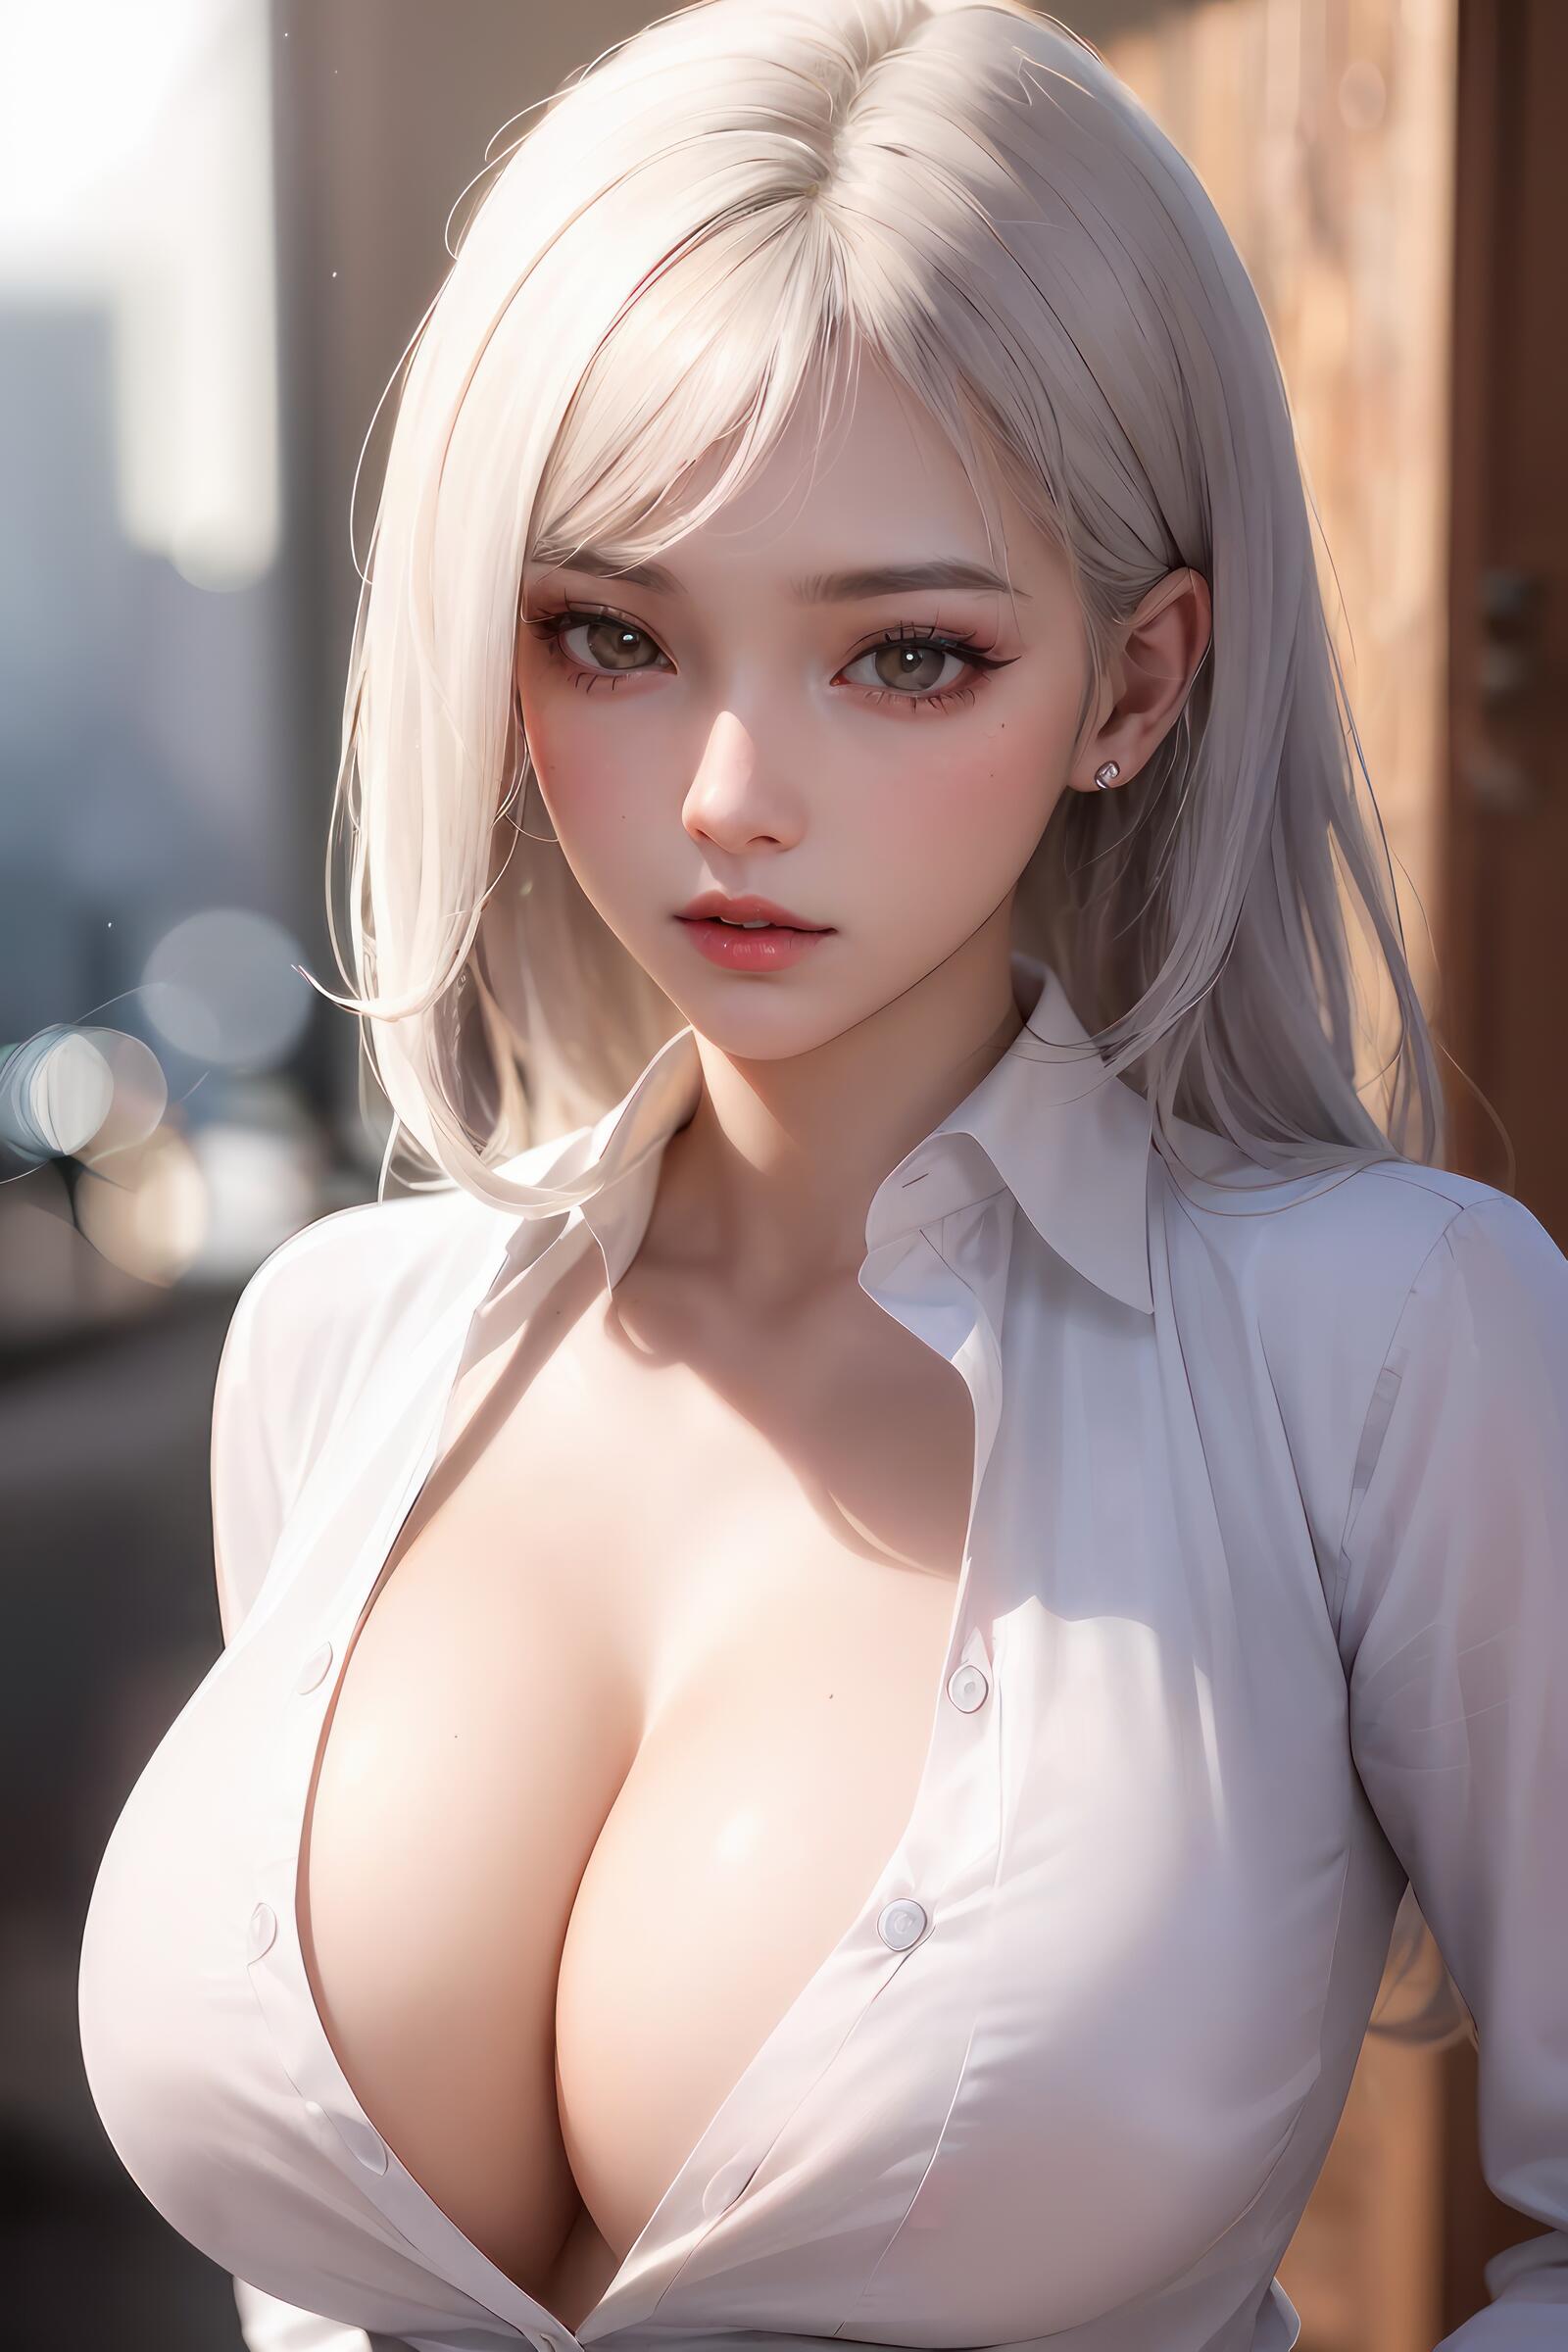 Free photo Stunning asian girl in white blouse